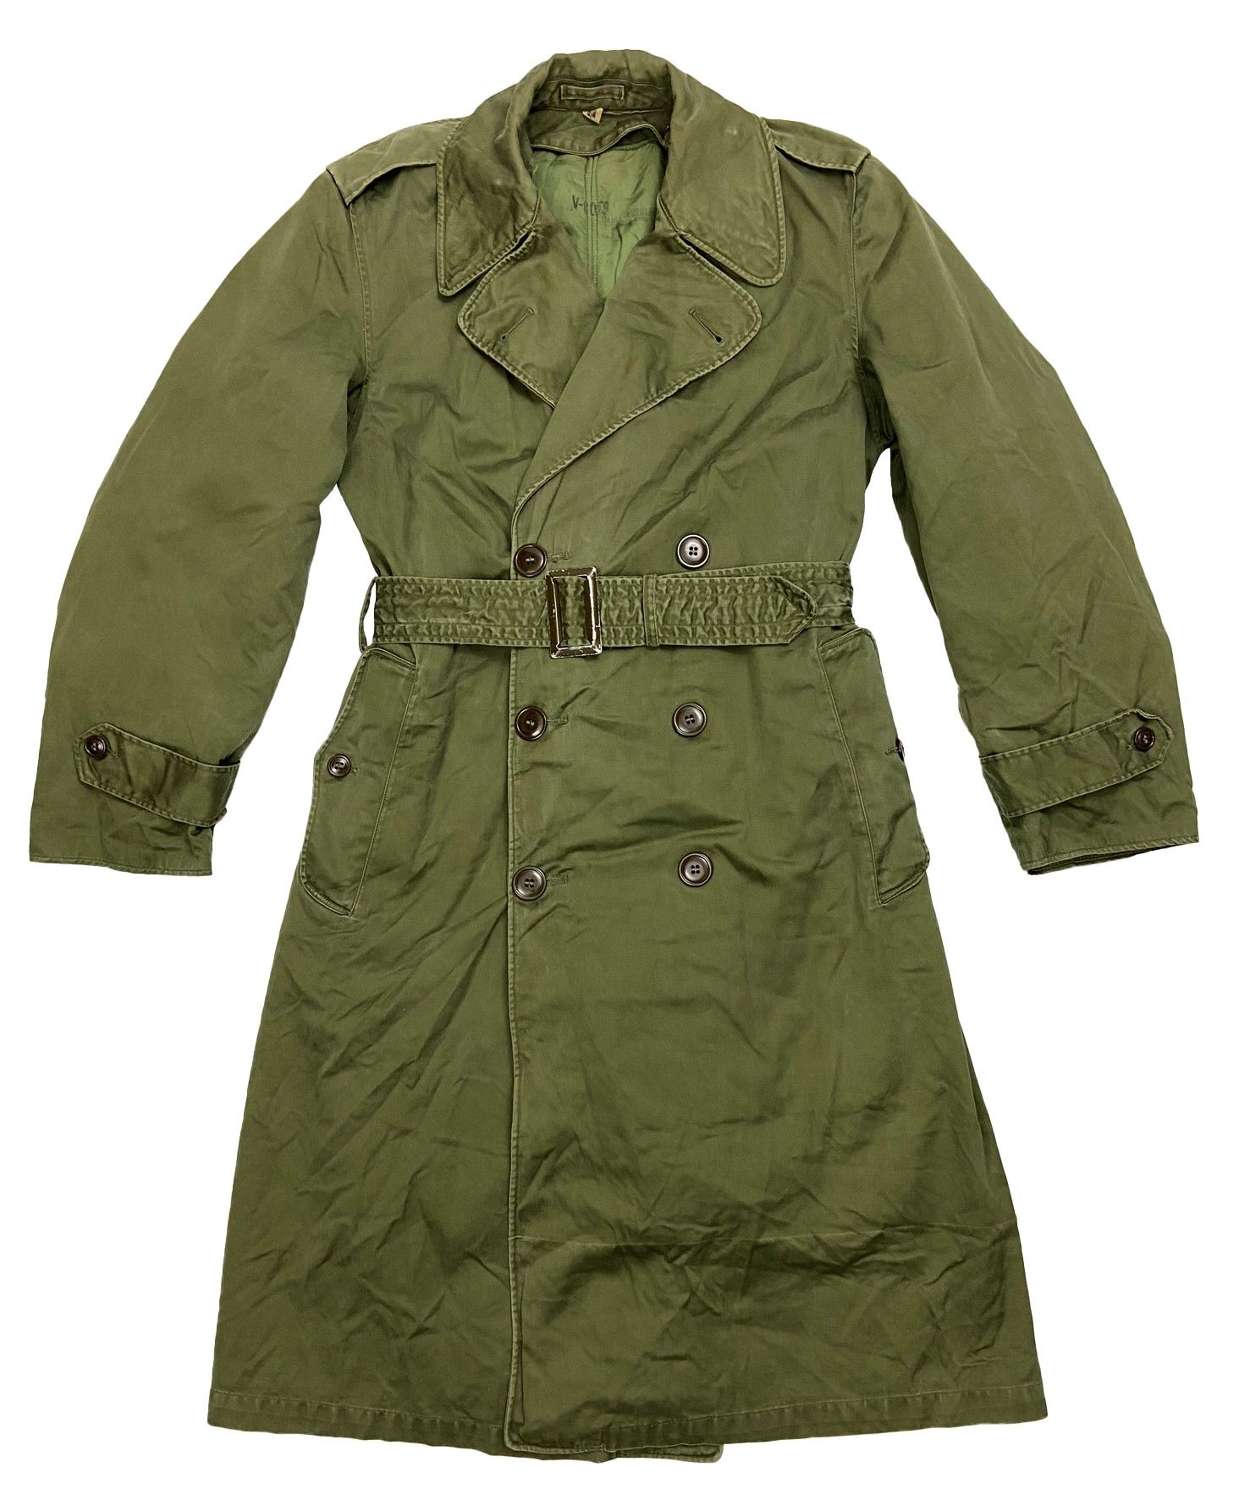 Original 1958 Dated US Army O.G 107 Raincoat - Size Regular Small